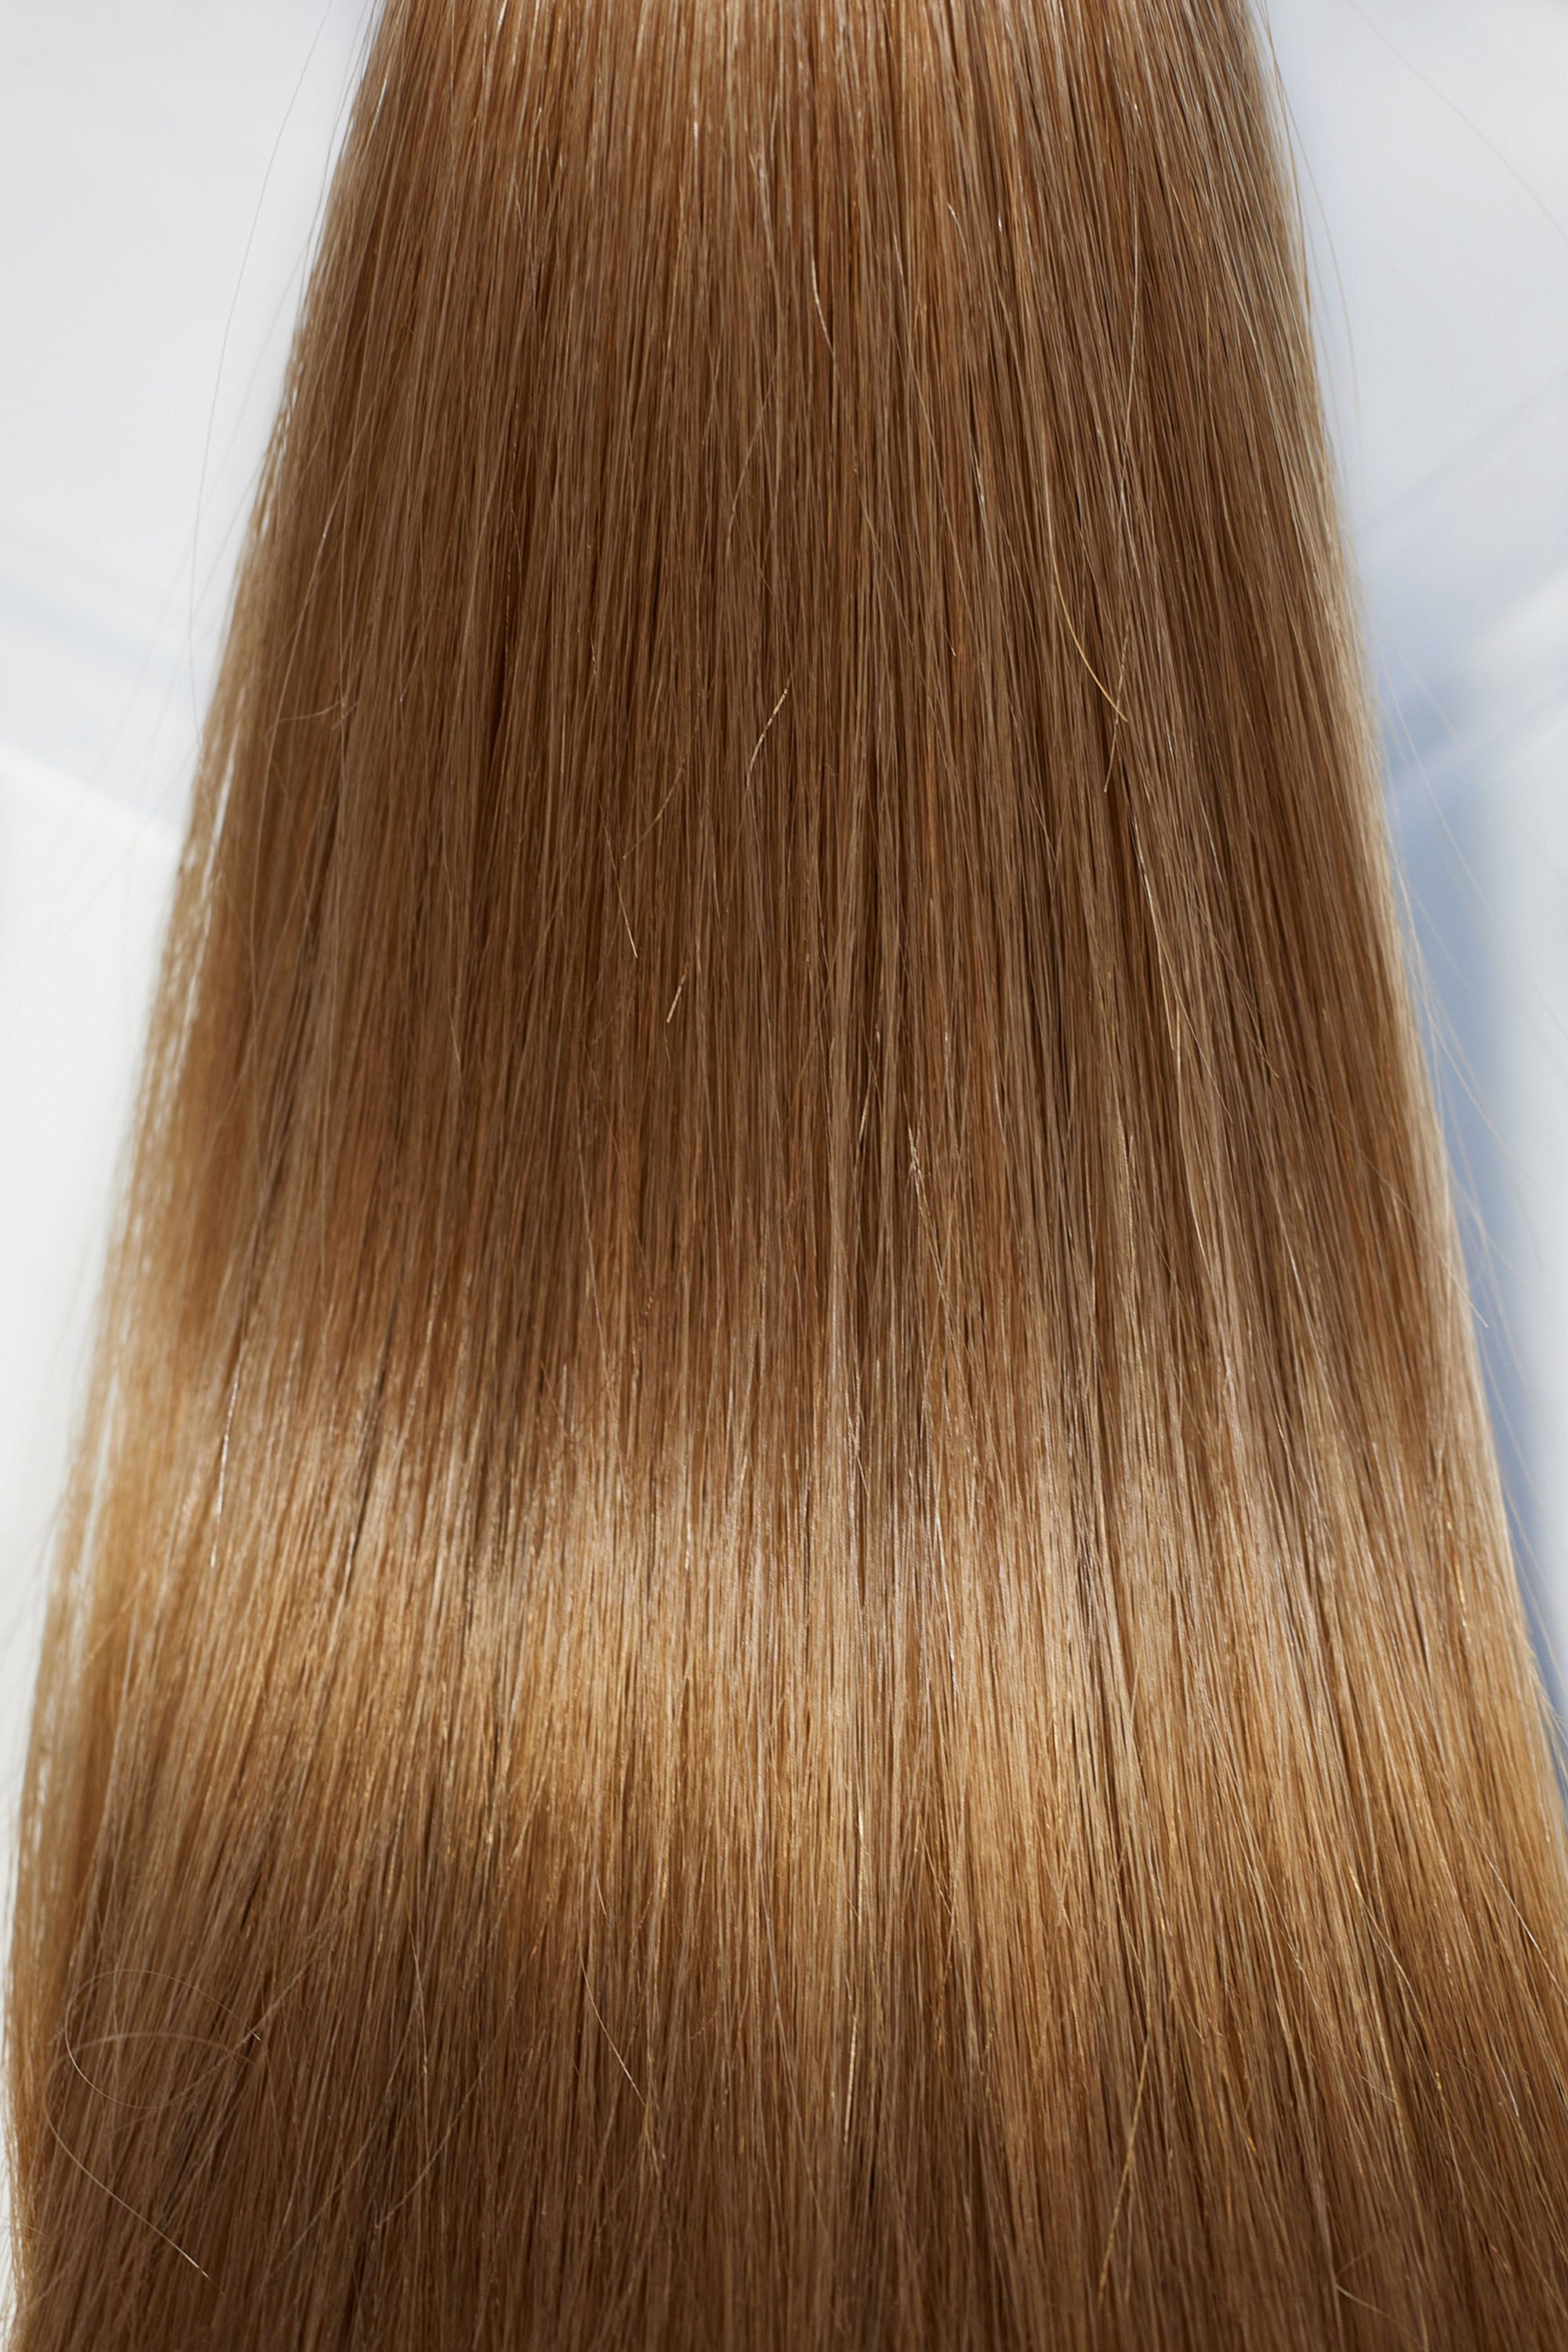 Behair professional Keratin Tip "Premium" 20" (50cm) Natural Straight Caramel Brown #8 - 25g (1g each pcs) hair extensions